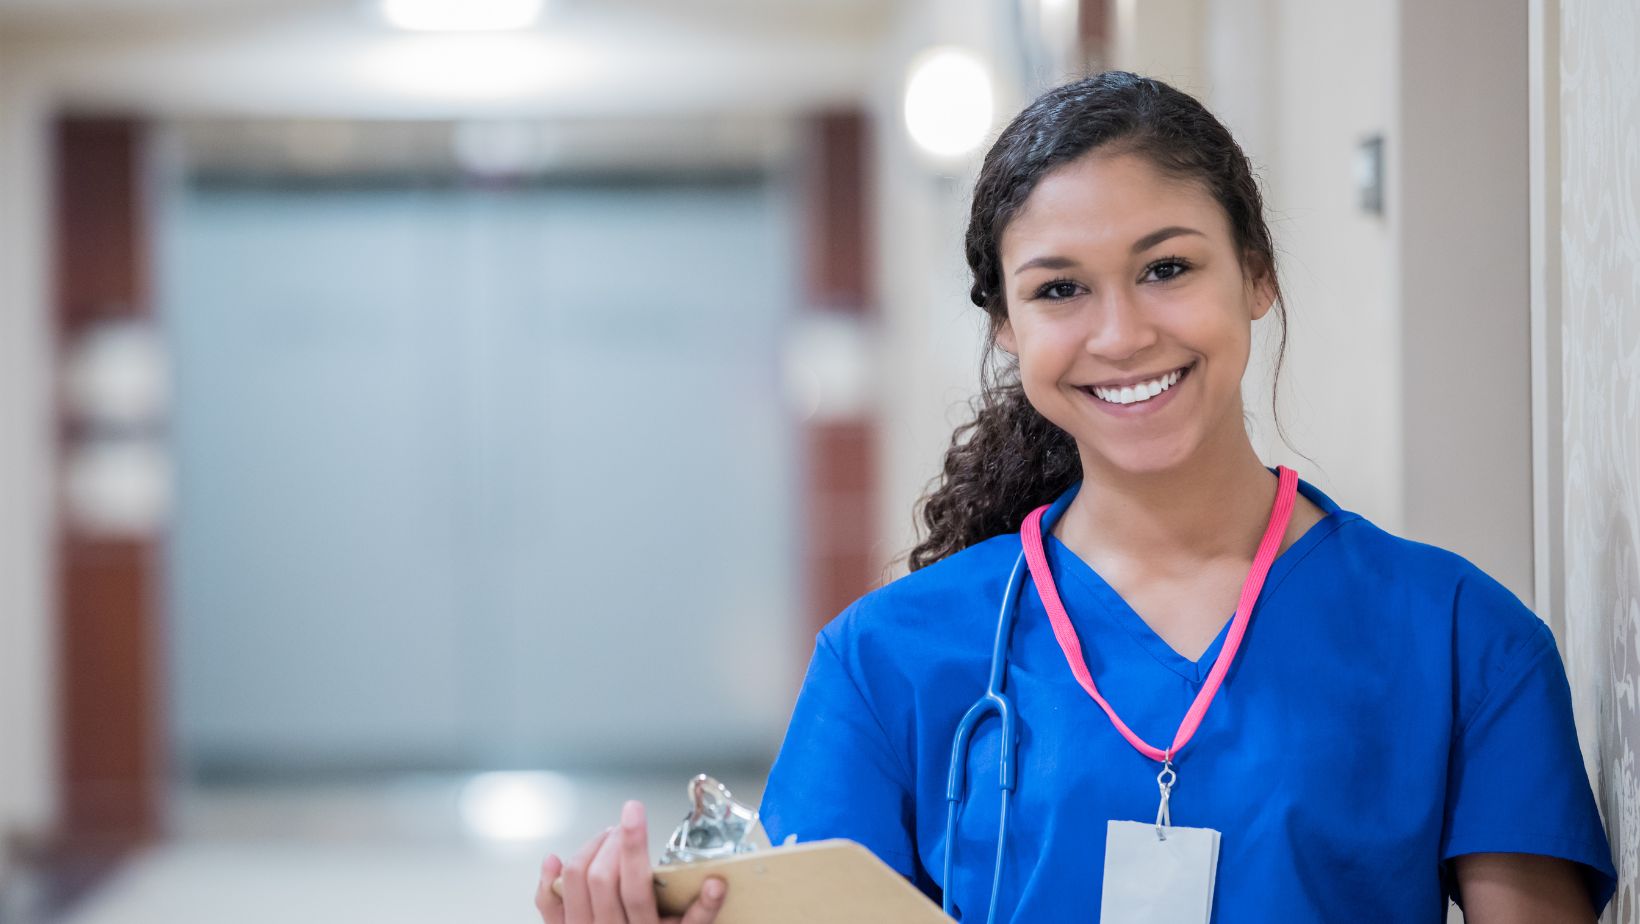 Reasons to Pursue a Career as a Travel Nurse